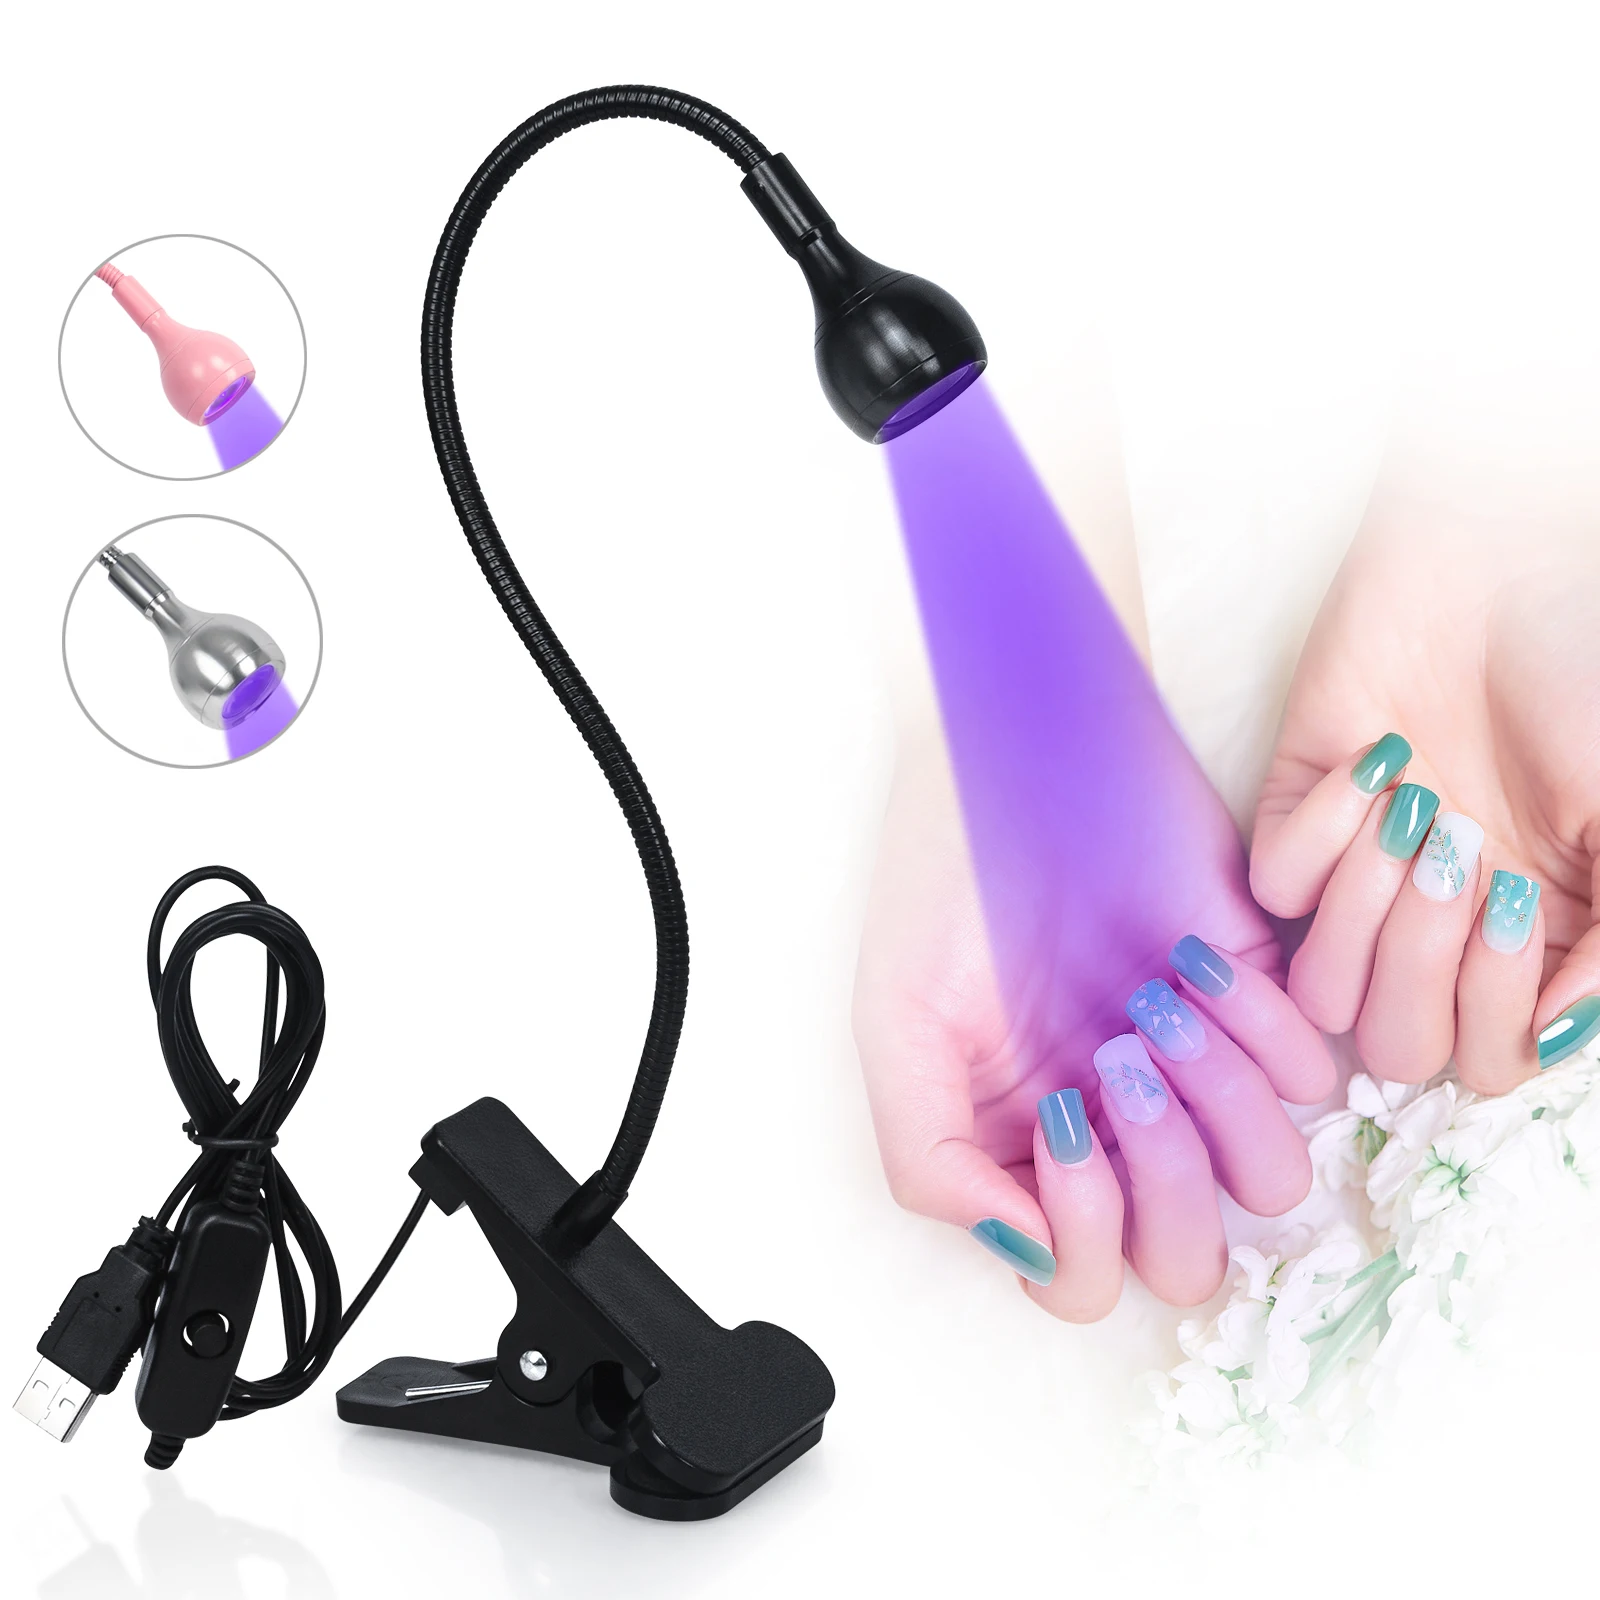 

Mini UV Led Nail Lamp Ultraviolet Lights Dryer Ongles Lampe Flexible Clip-On Desk USB Gel Curing Manicure Pedicure Salon Tools